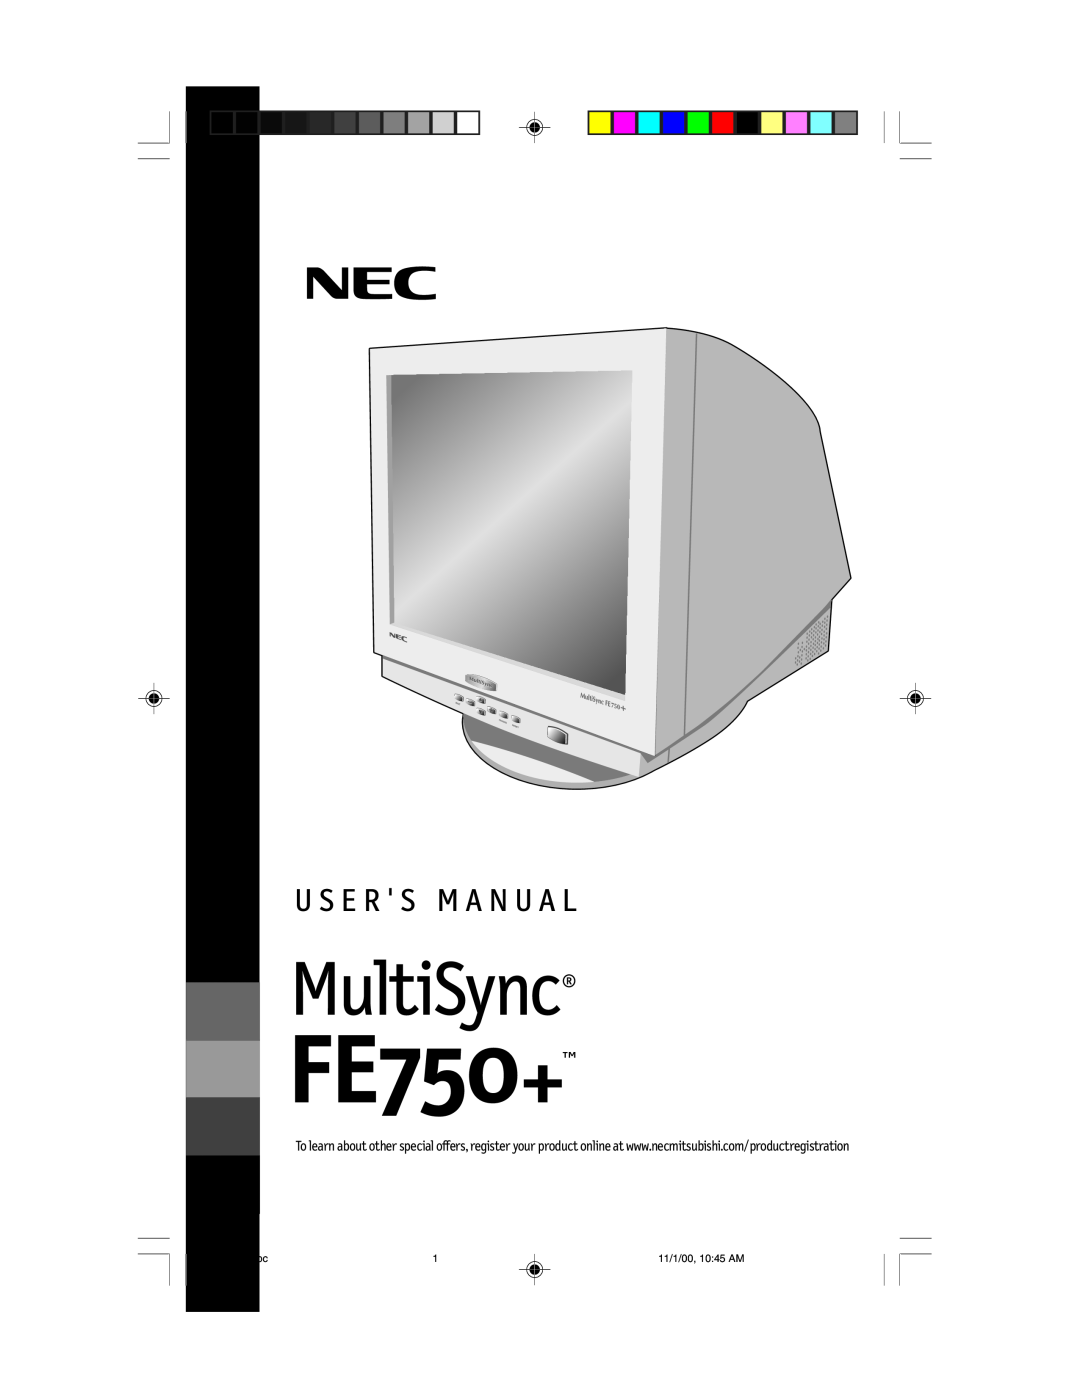 NEC FE750 Plus user manual FE750+, MultiSync, U S E R S M A N U A L, Fe750+.wpc, 11/1/00, 1045 AM 